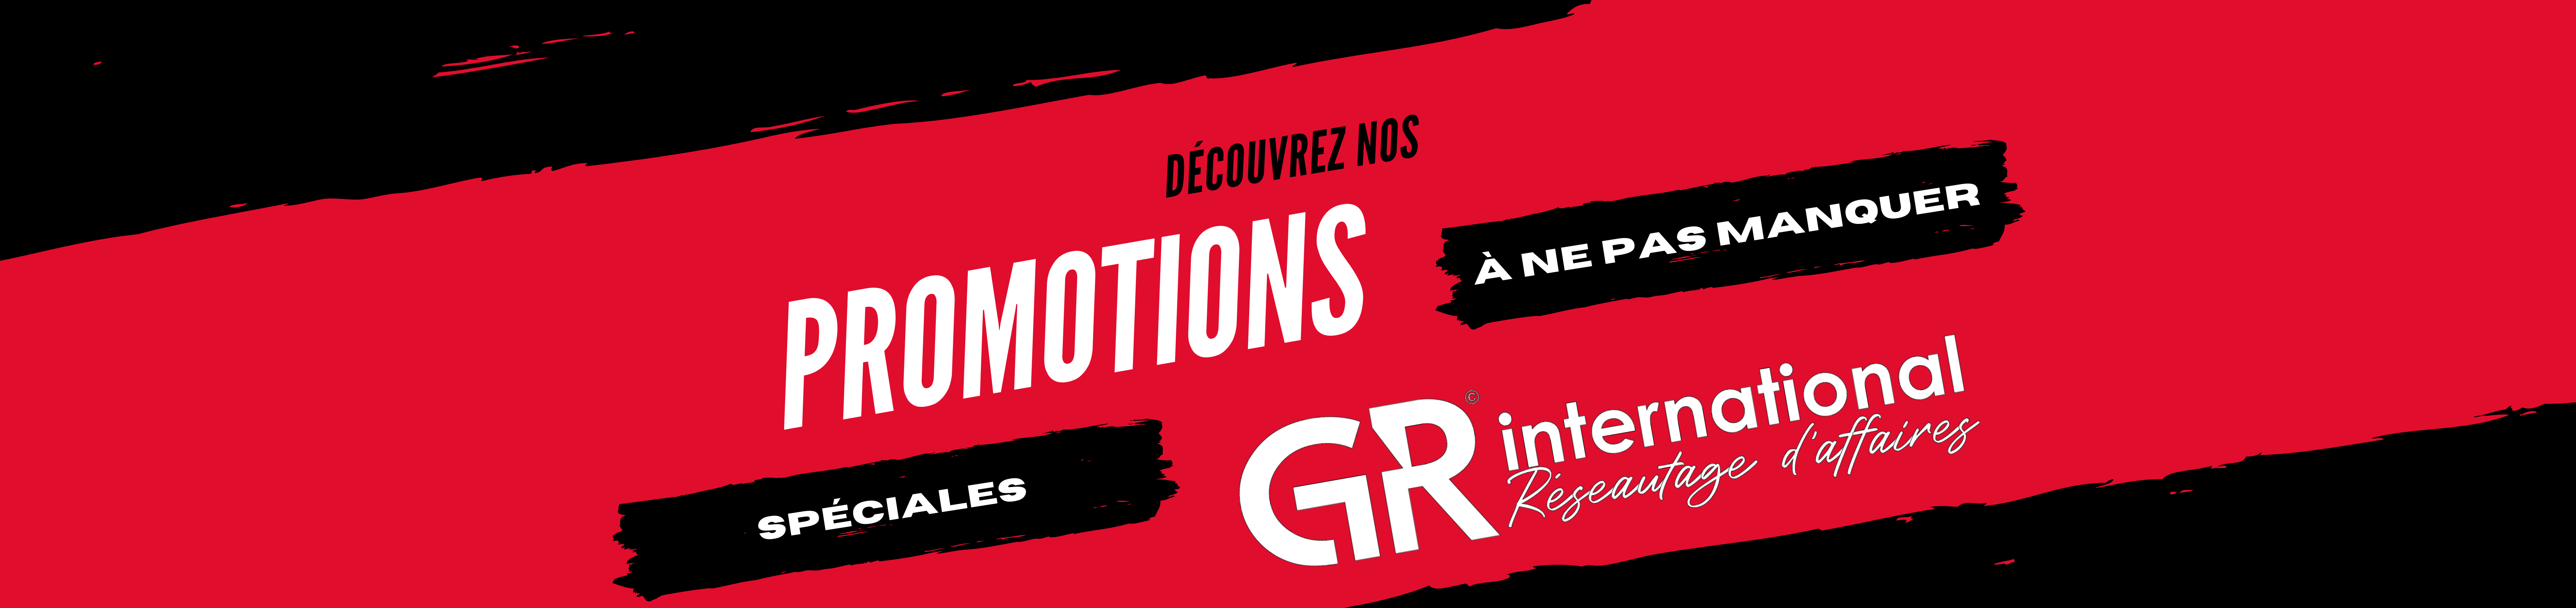 Promotion GR international